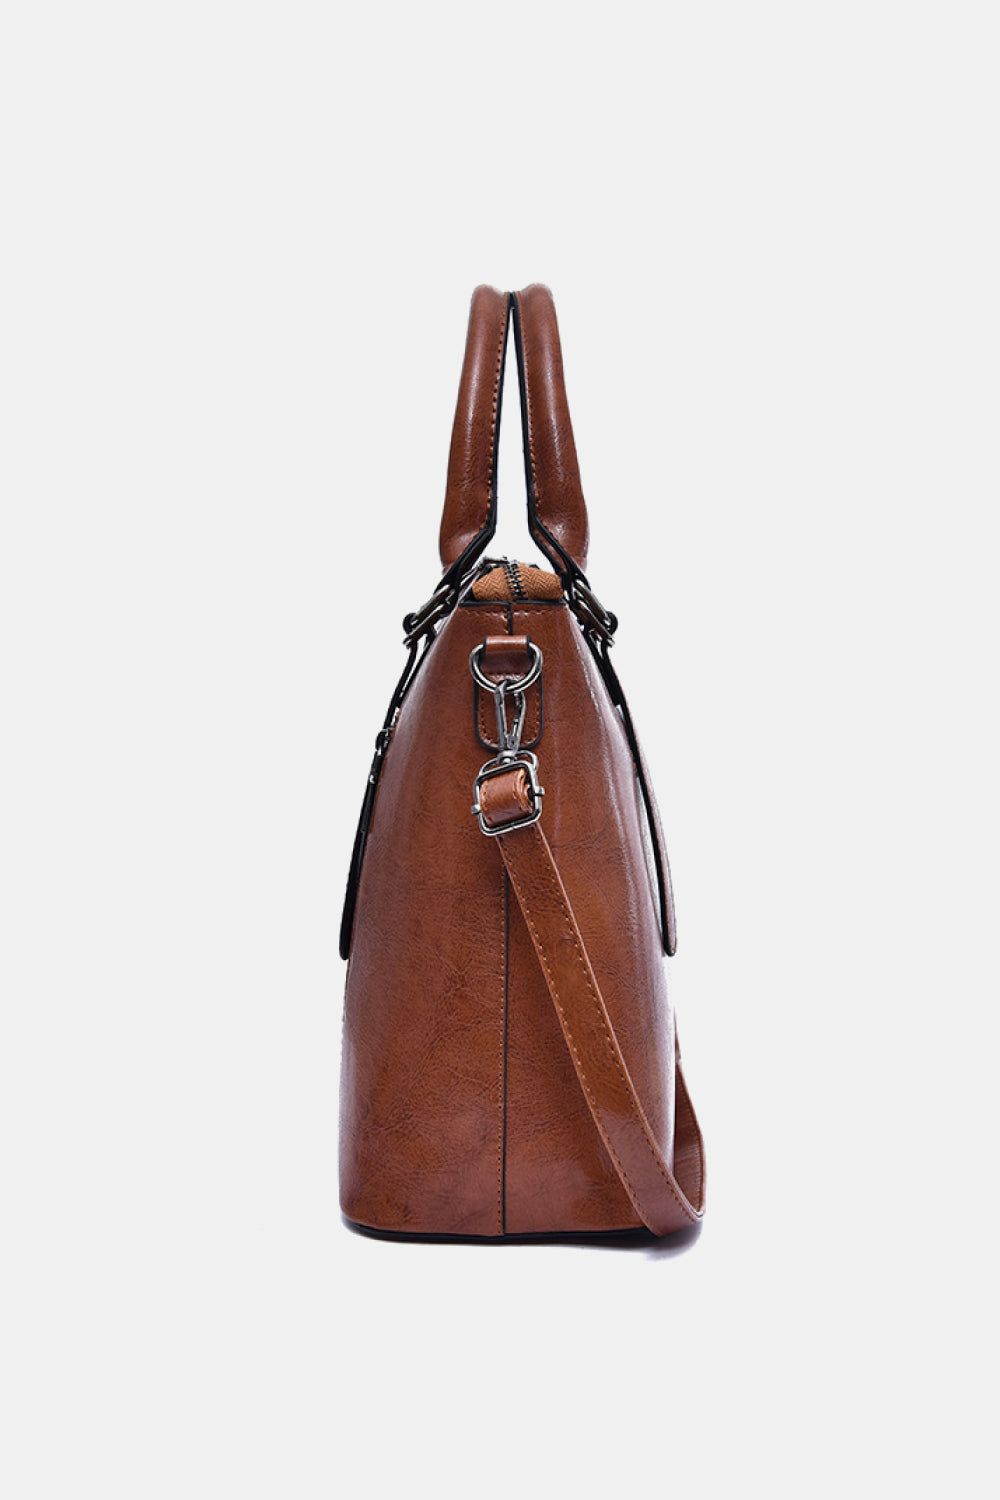 PU Leather Handbag.